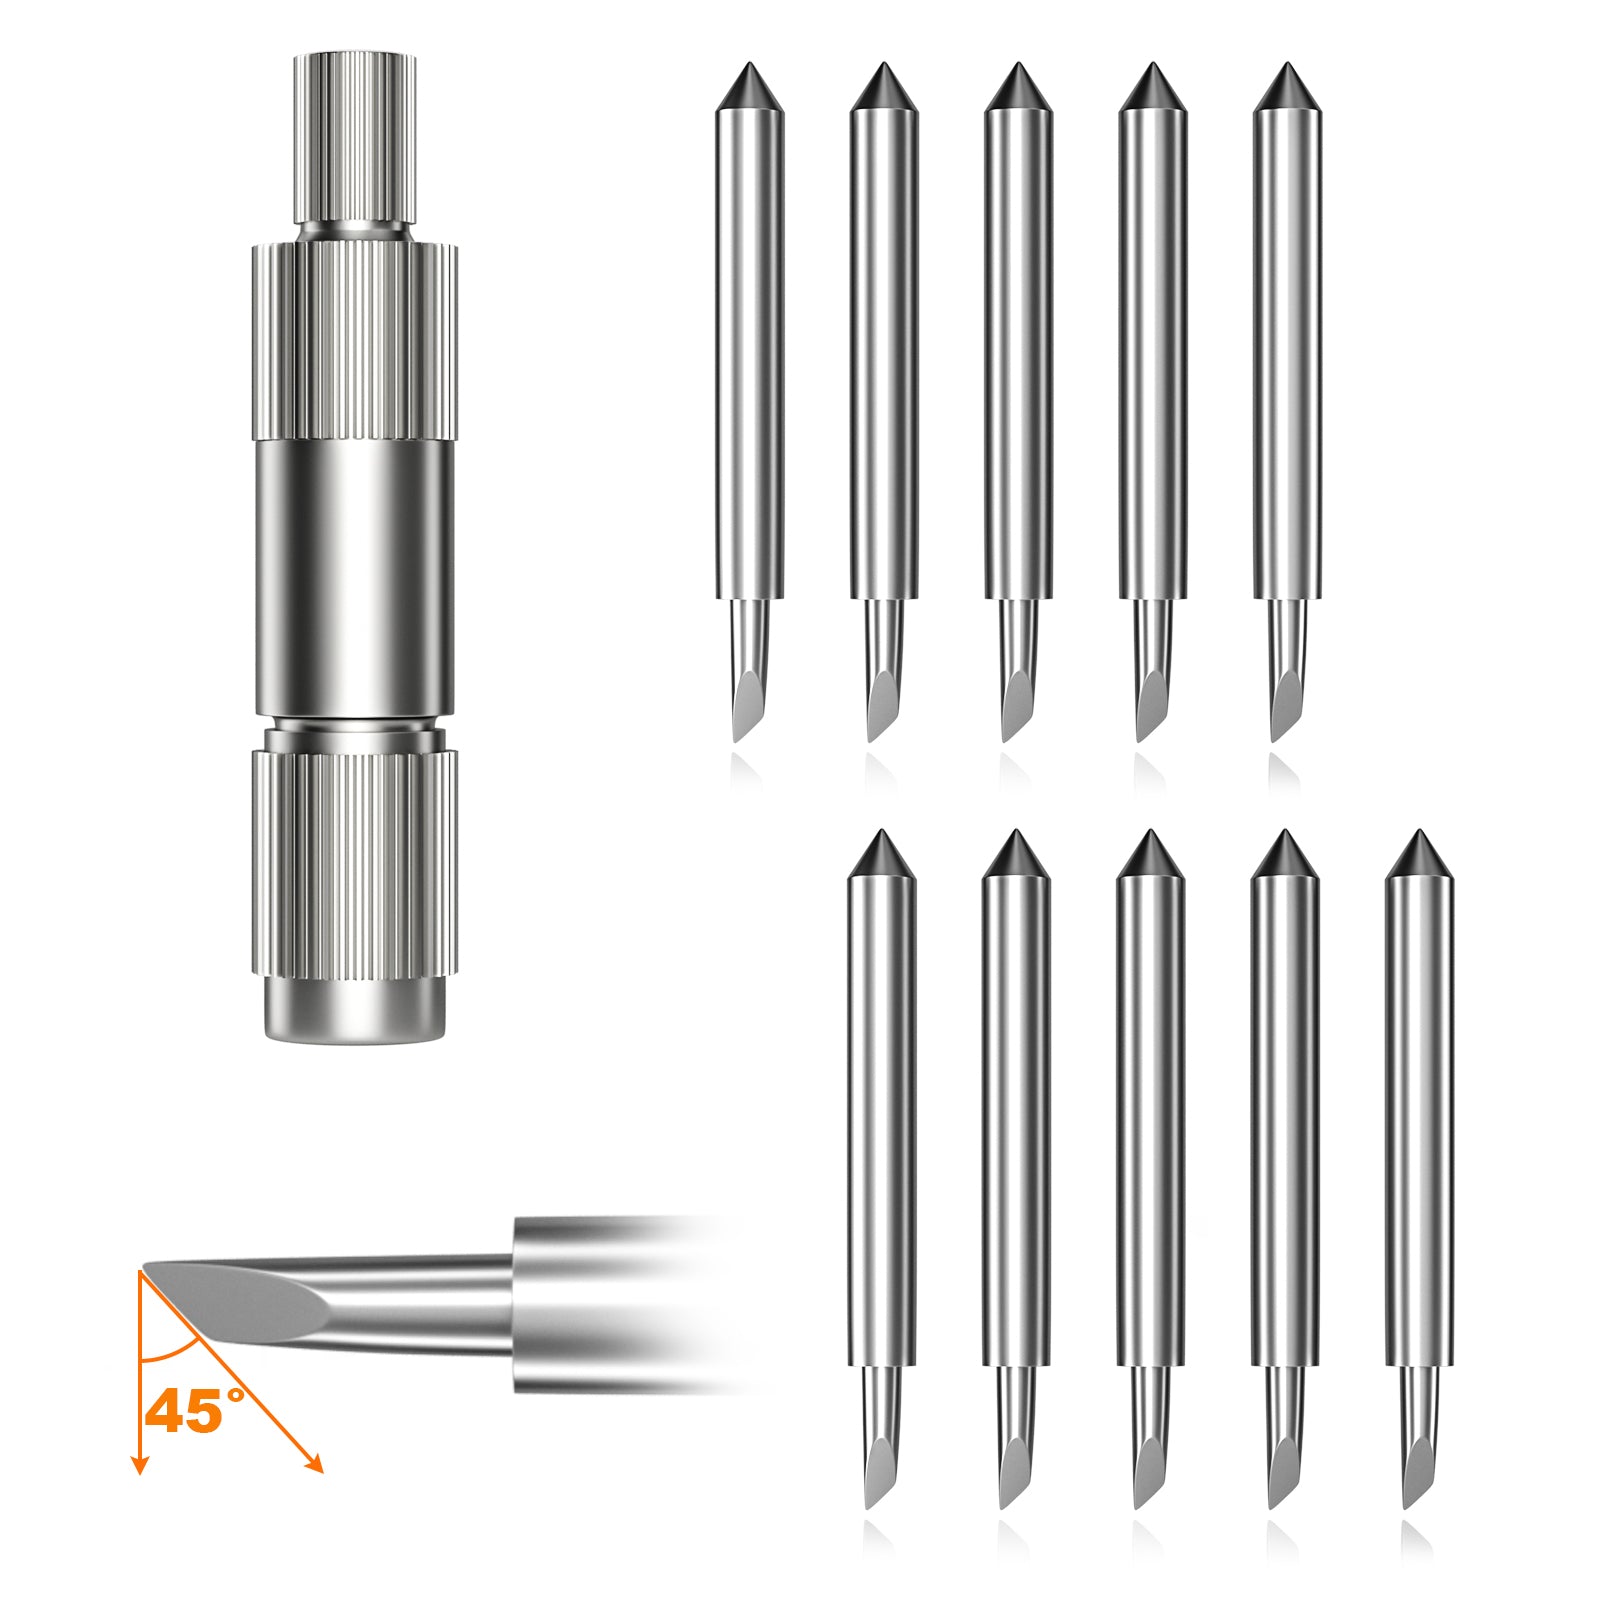 Blade Housing (1 Pack)+45° BLADE (10 Packs) For NEJE Max 4 Laser Engraver